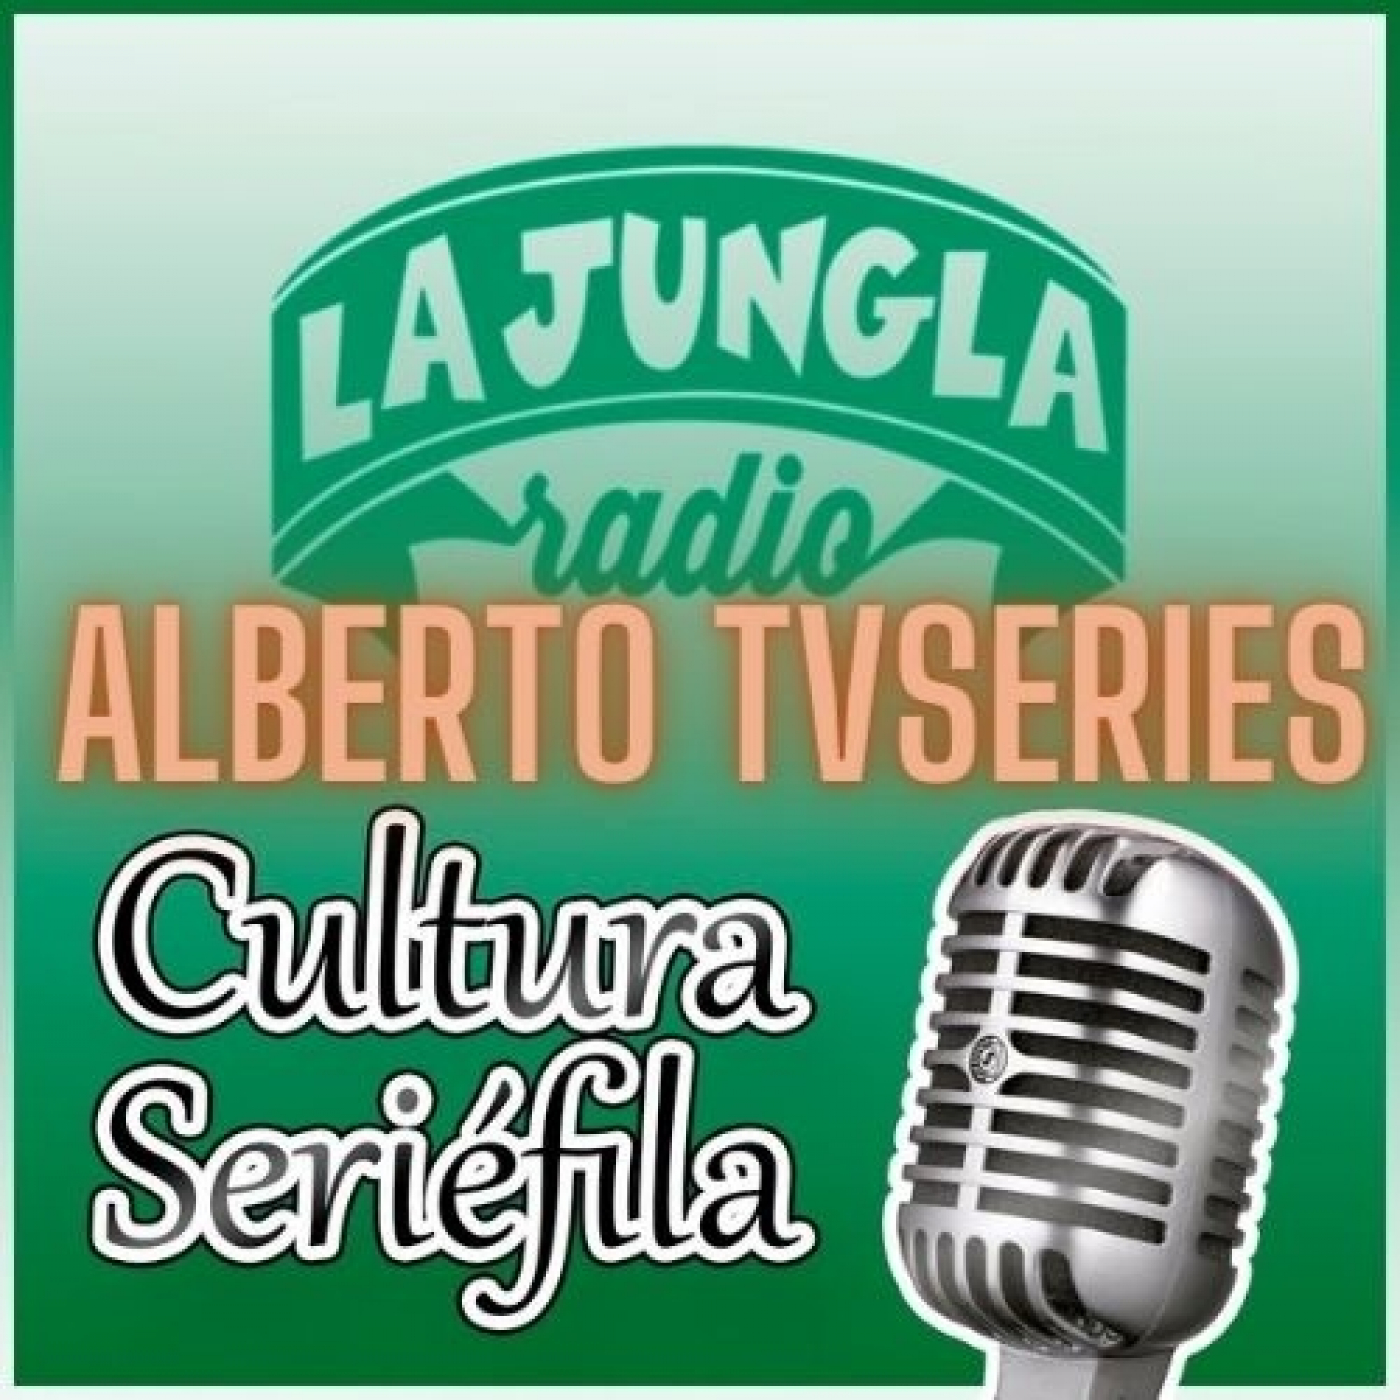 #33 Alberto TvSeries (Cultura Seriefila, La jungla radio)